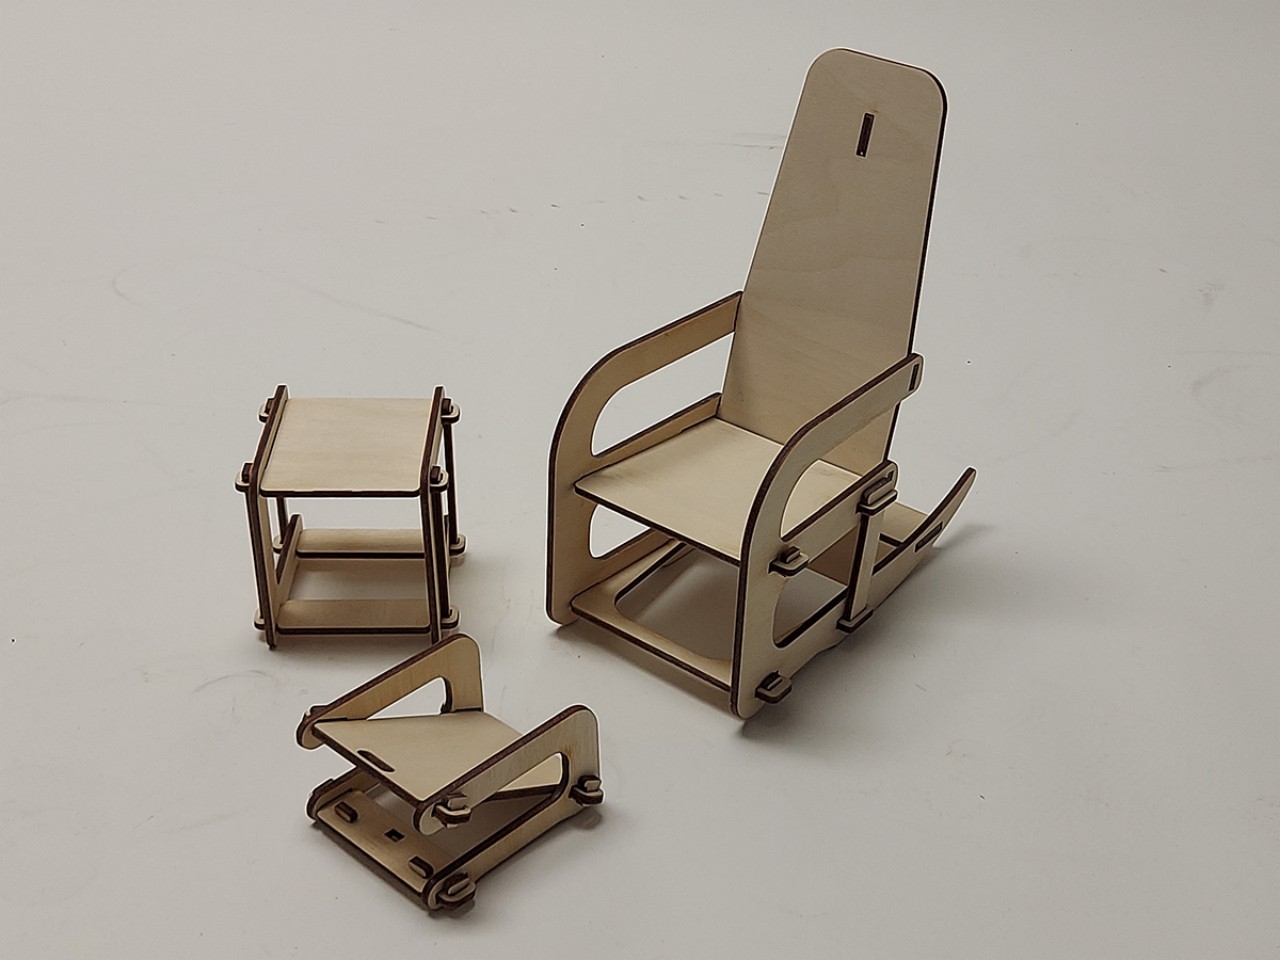 leaning-chair-hobiz-hobizru-xo6u3py-hbz6